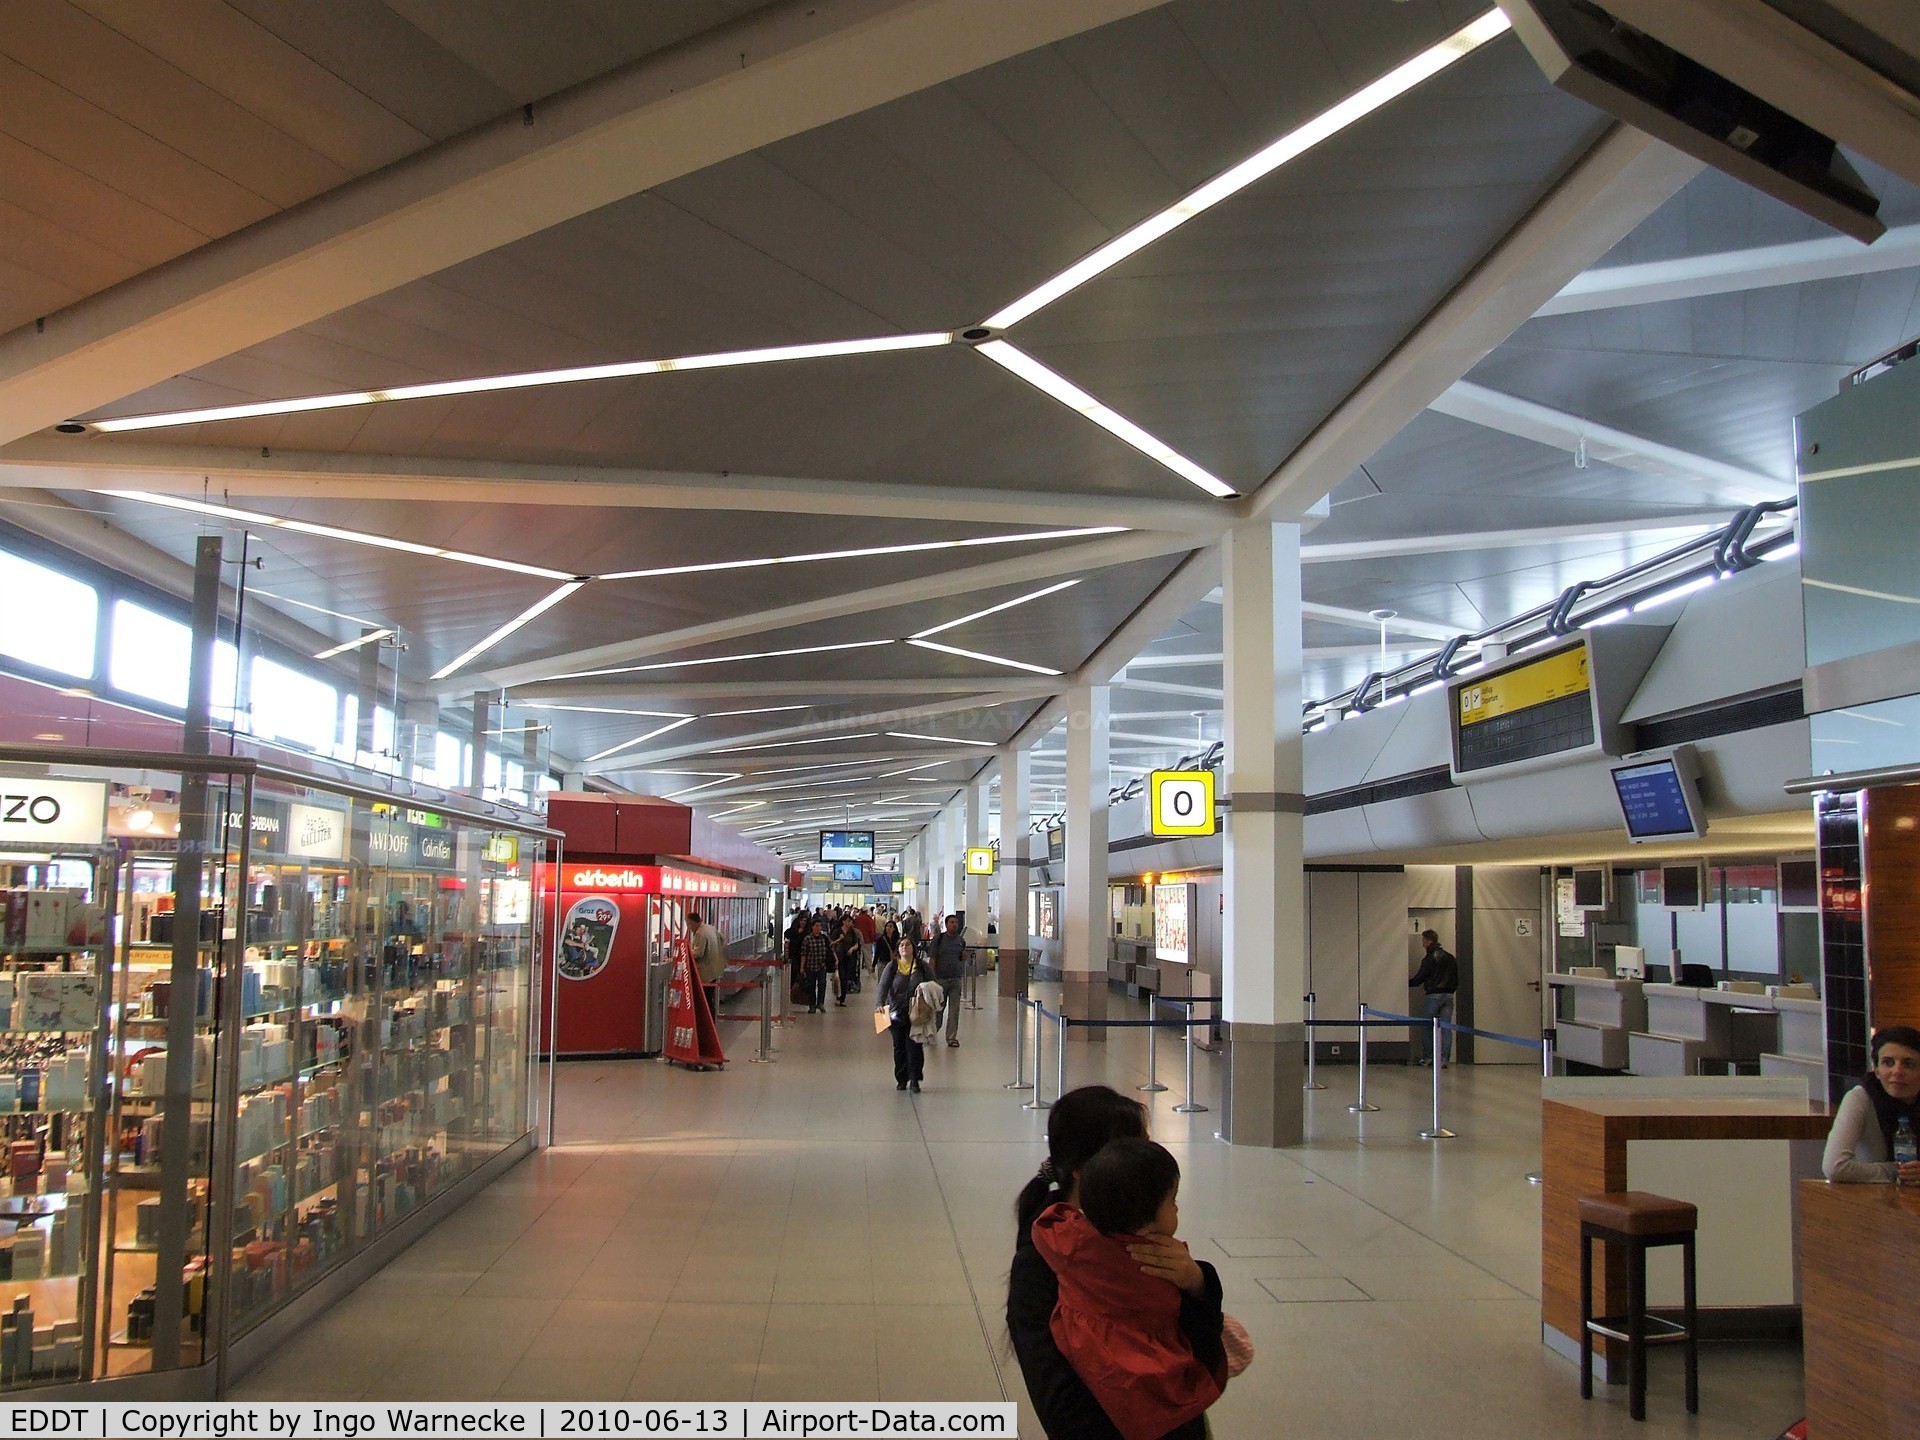 Tegel International Airport (closing in 2011), Berlin Germany (EDDT) - inside the main terminal at Berlin Tegel airport